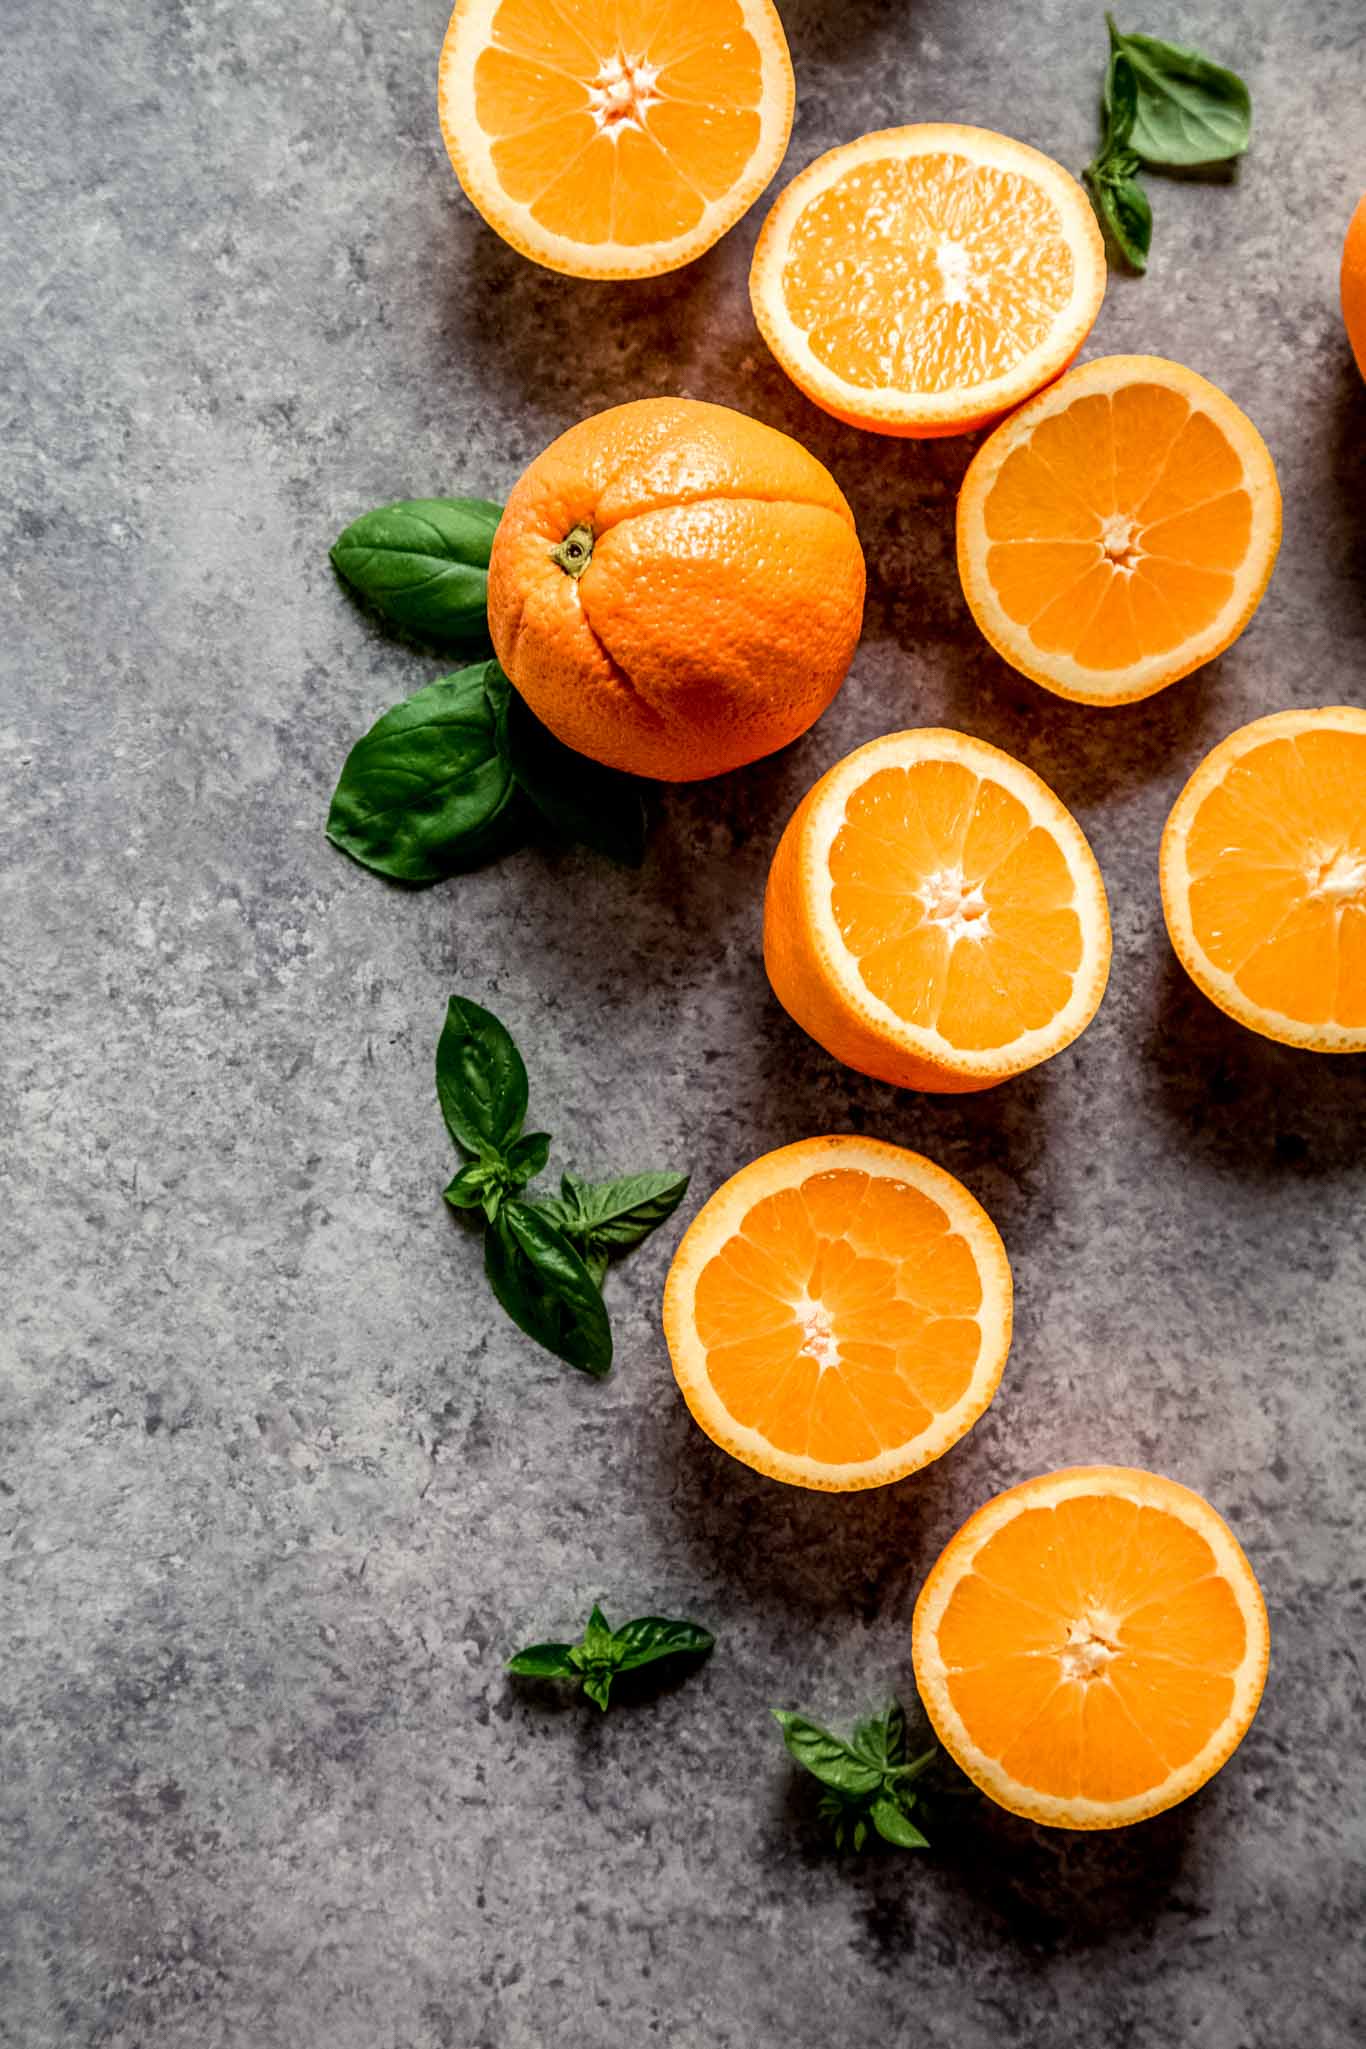 Oranges on concrete counter.